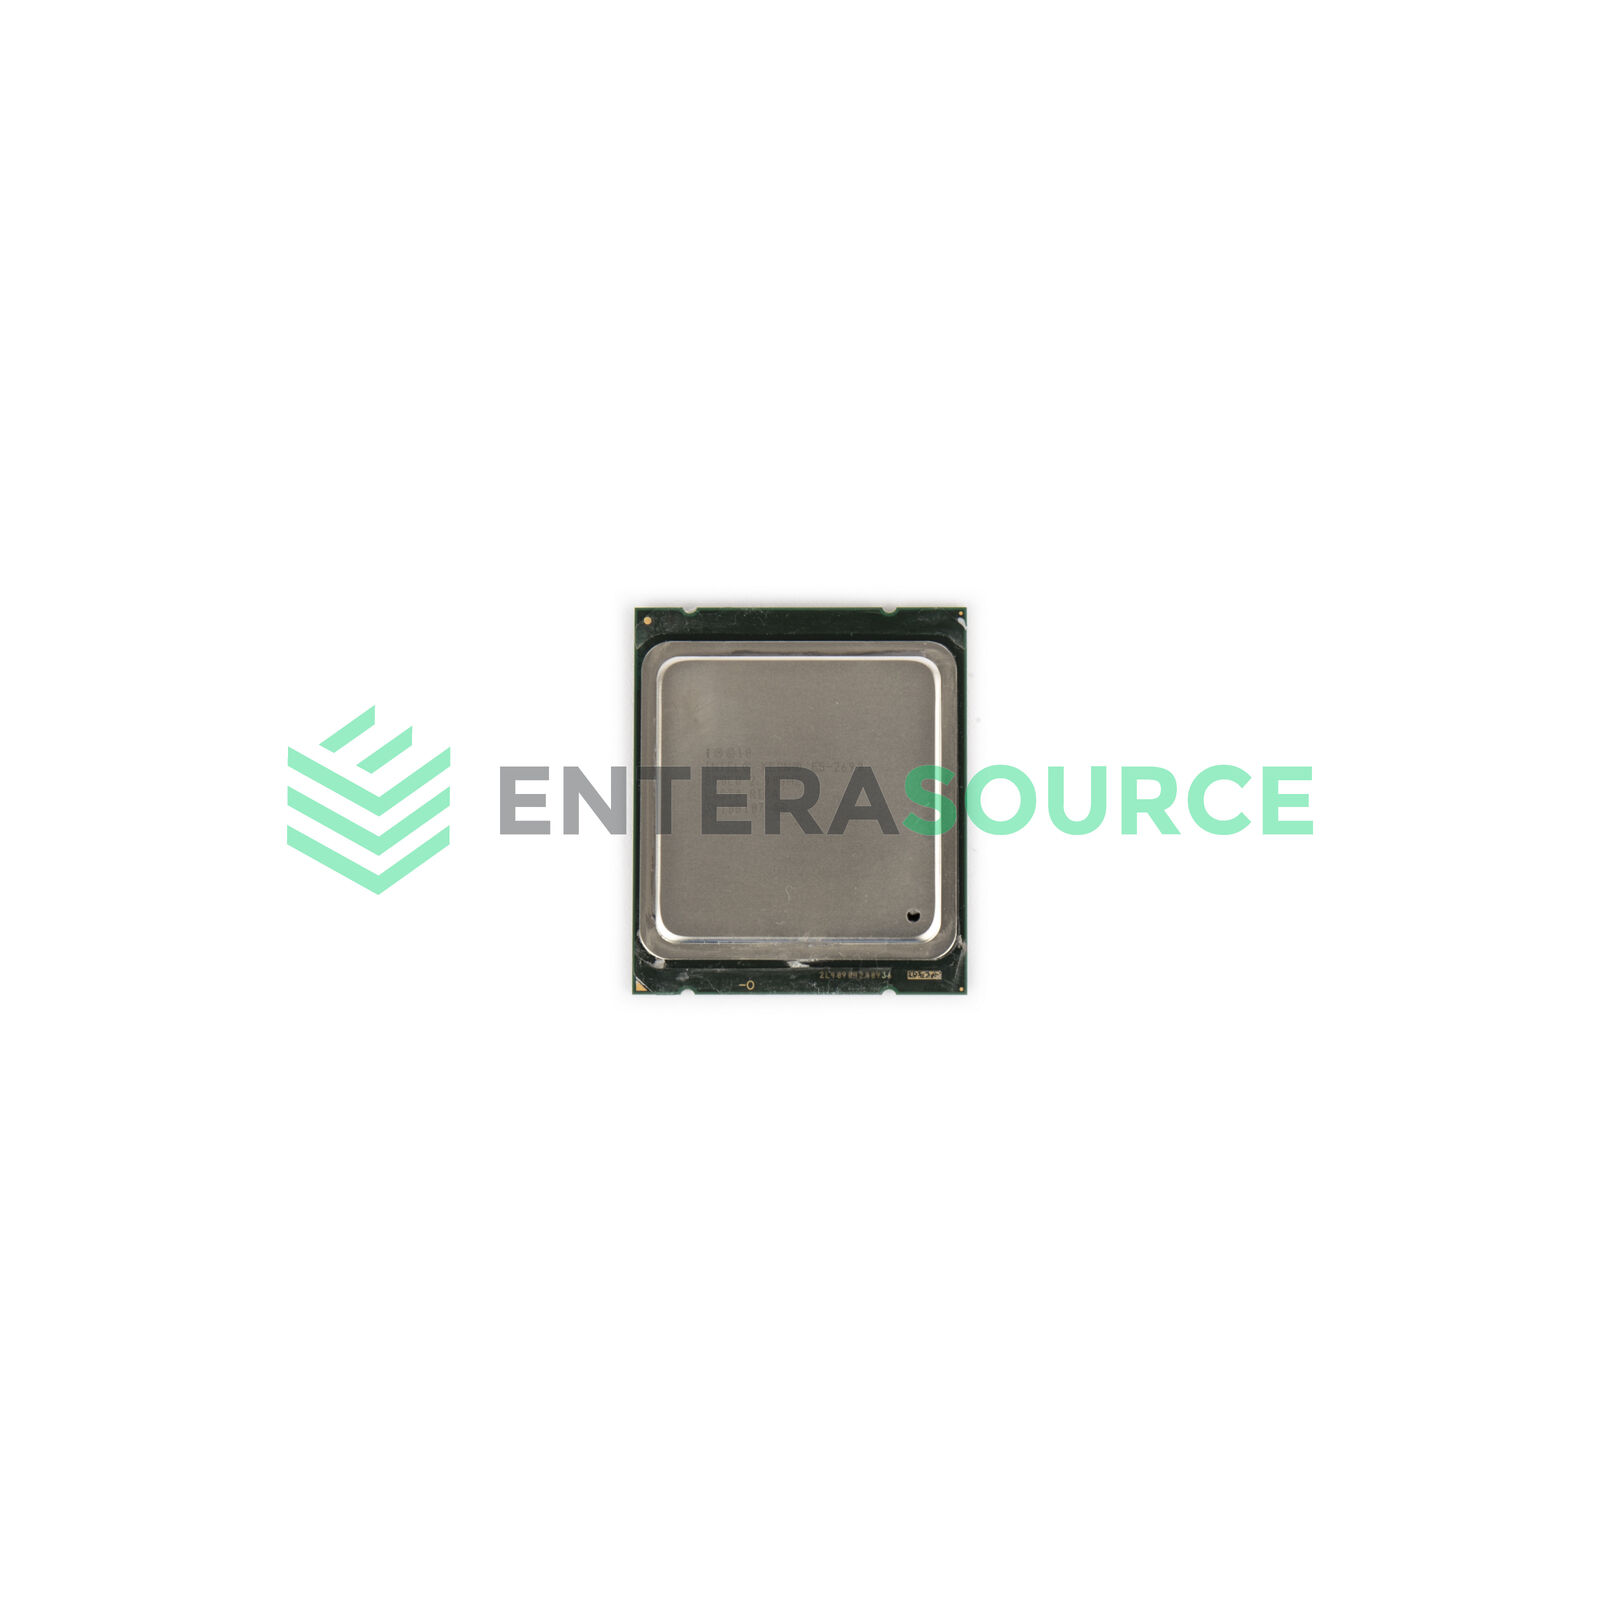 Intel Xeon E5-2690 2.9GHz 8 Core 20MB 8GT/s 135W Processor SR0L0